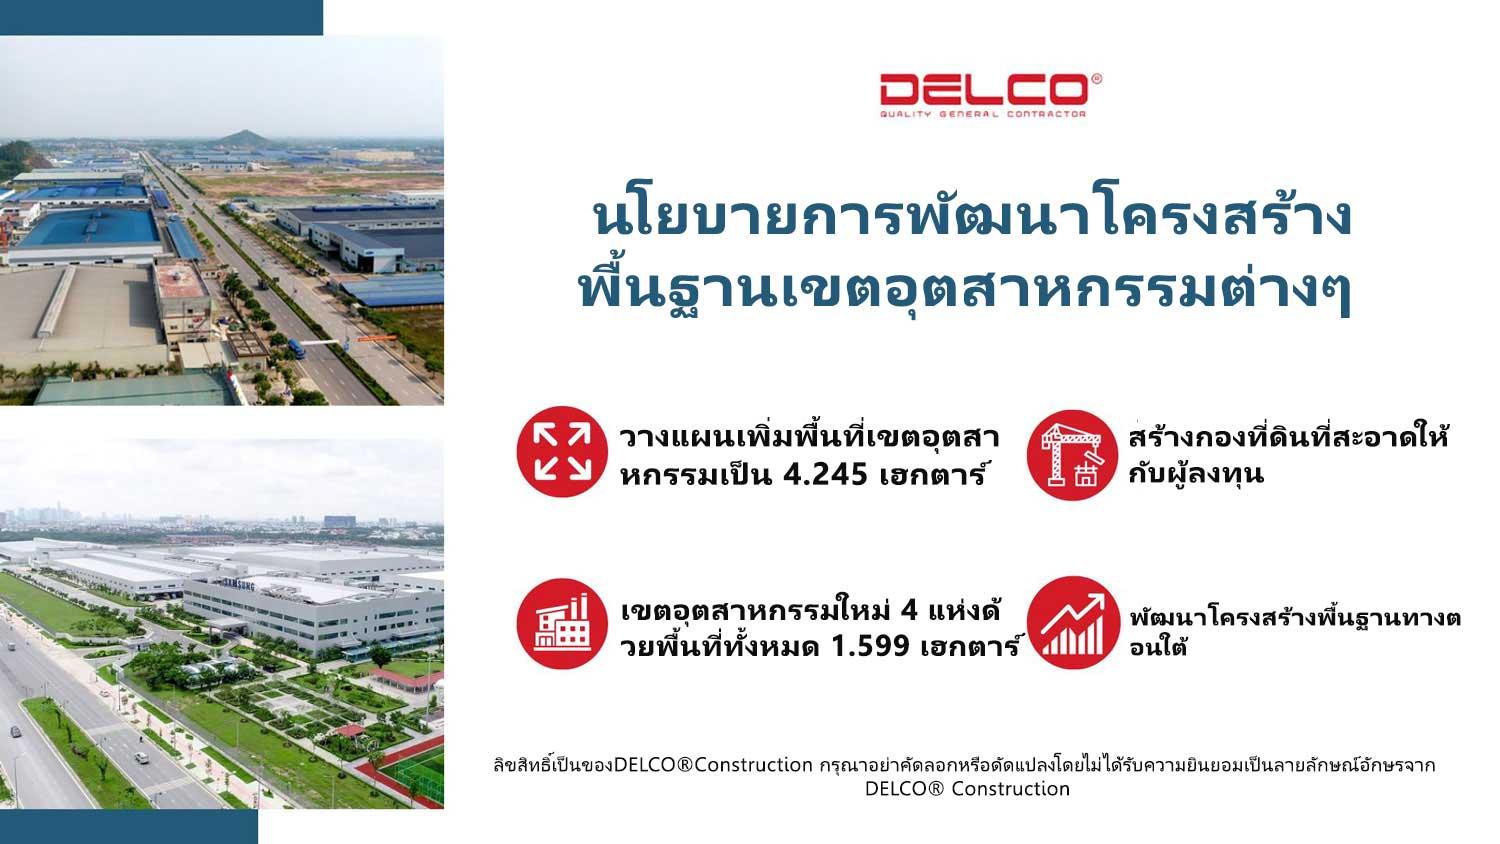 Delco Construction